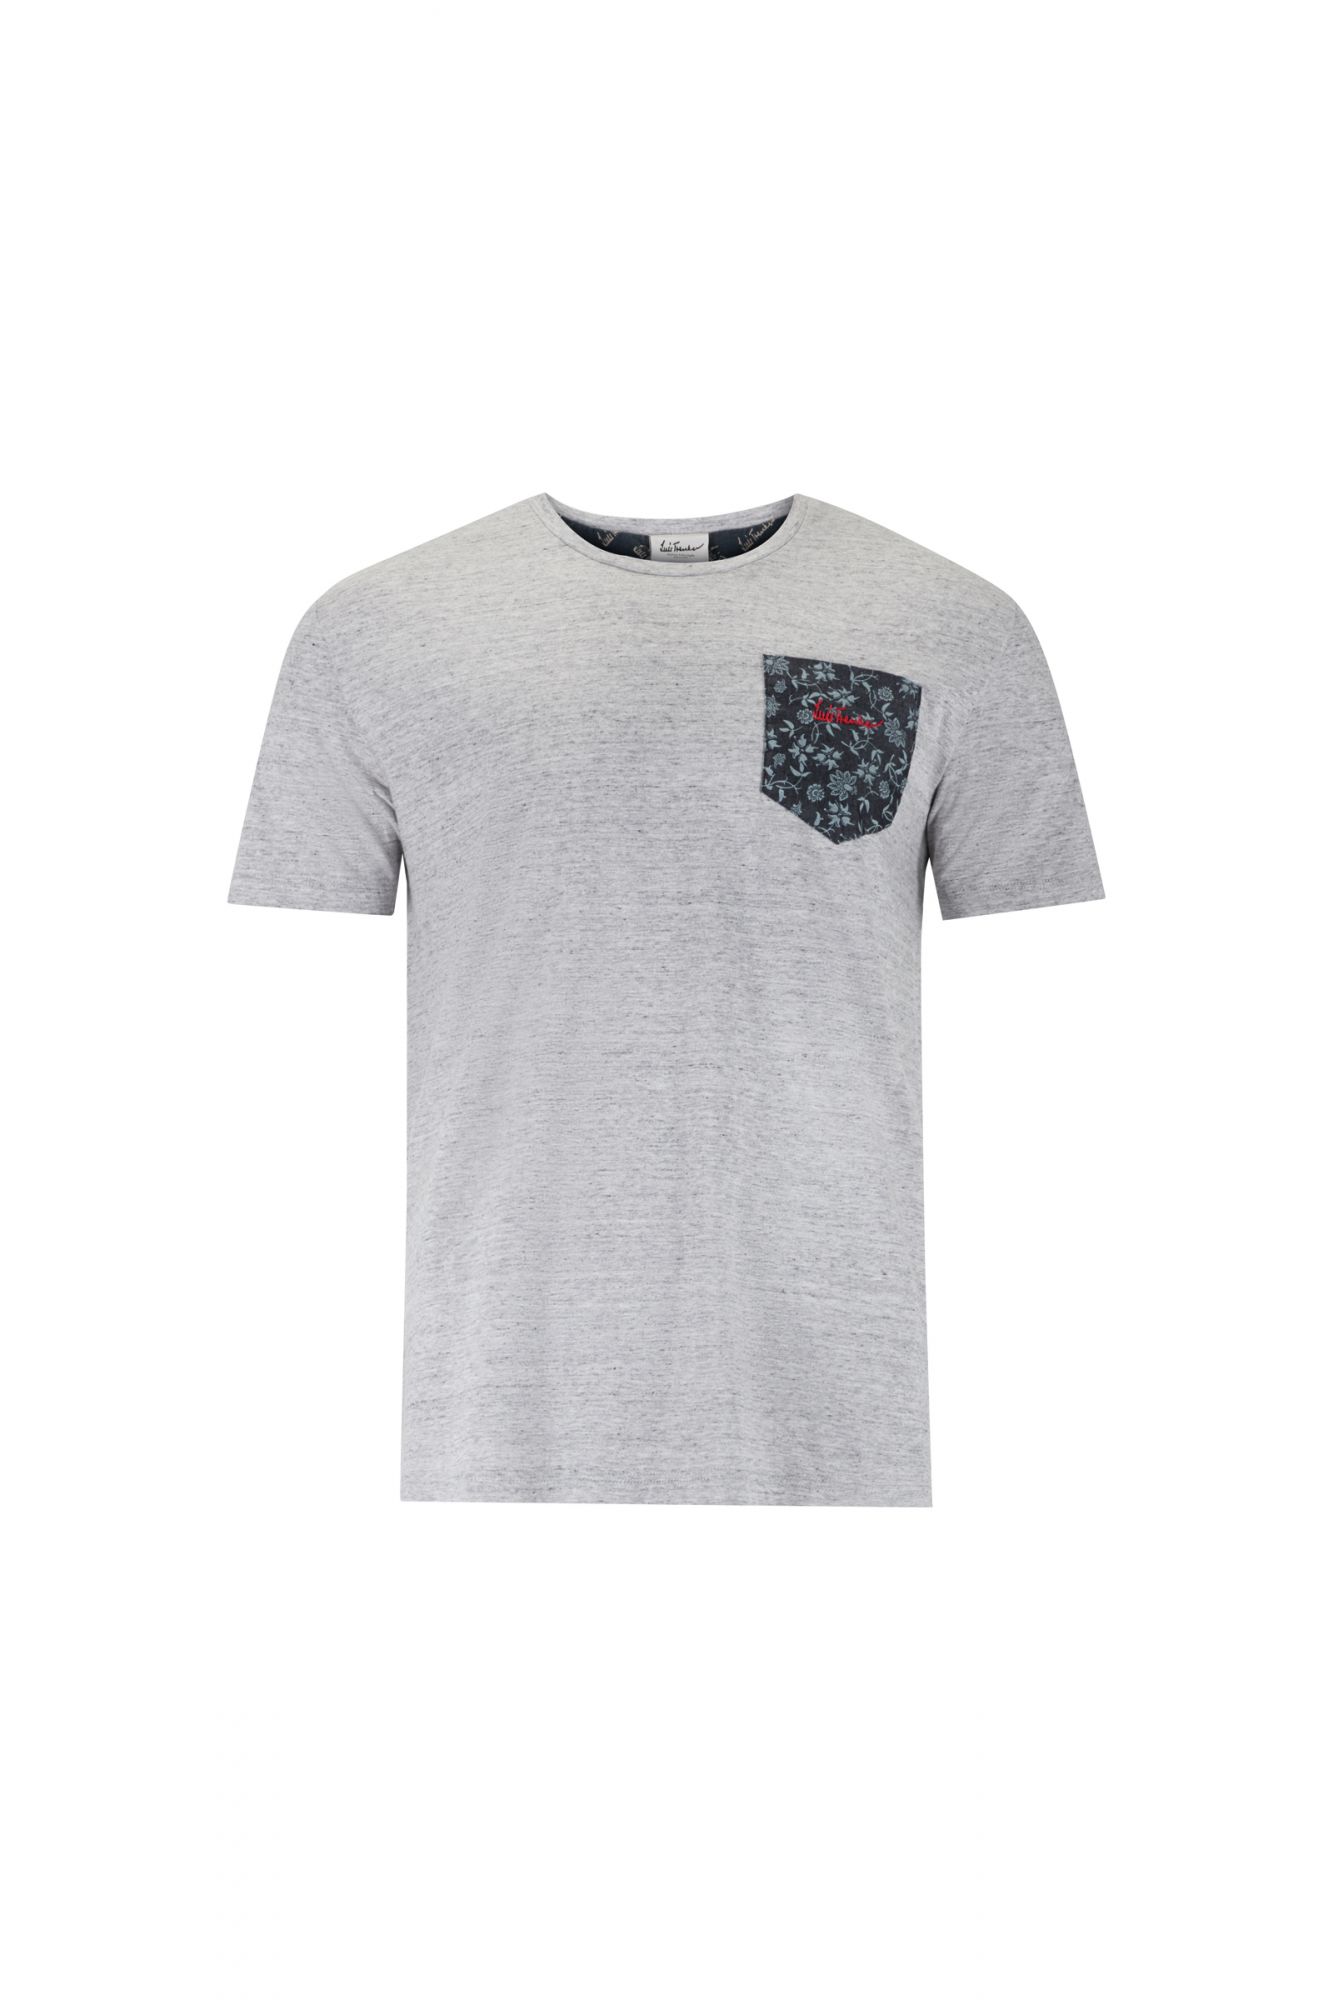 Luis Trenker Cliff Grau- Male Kurzarm-Shirts- Grsse XL - Farbe Hellgrau